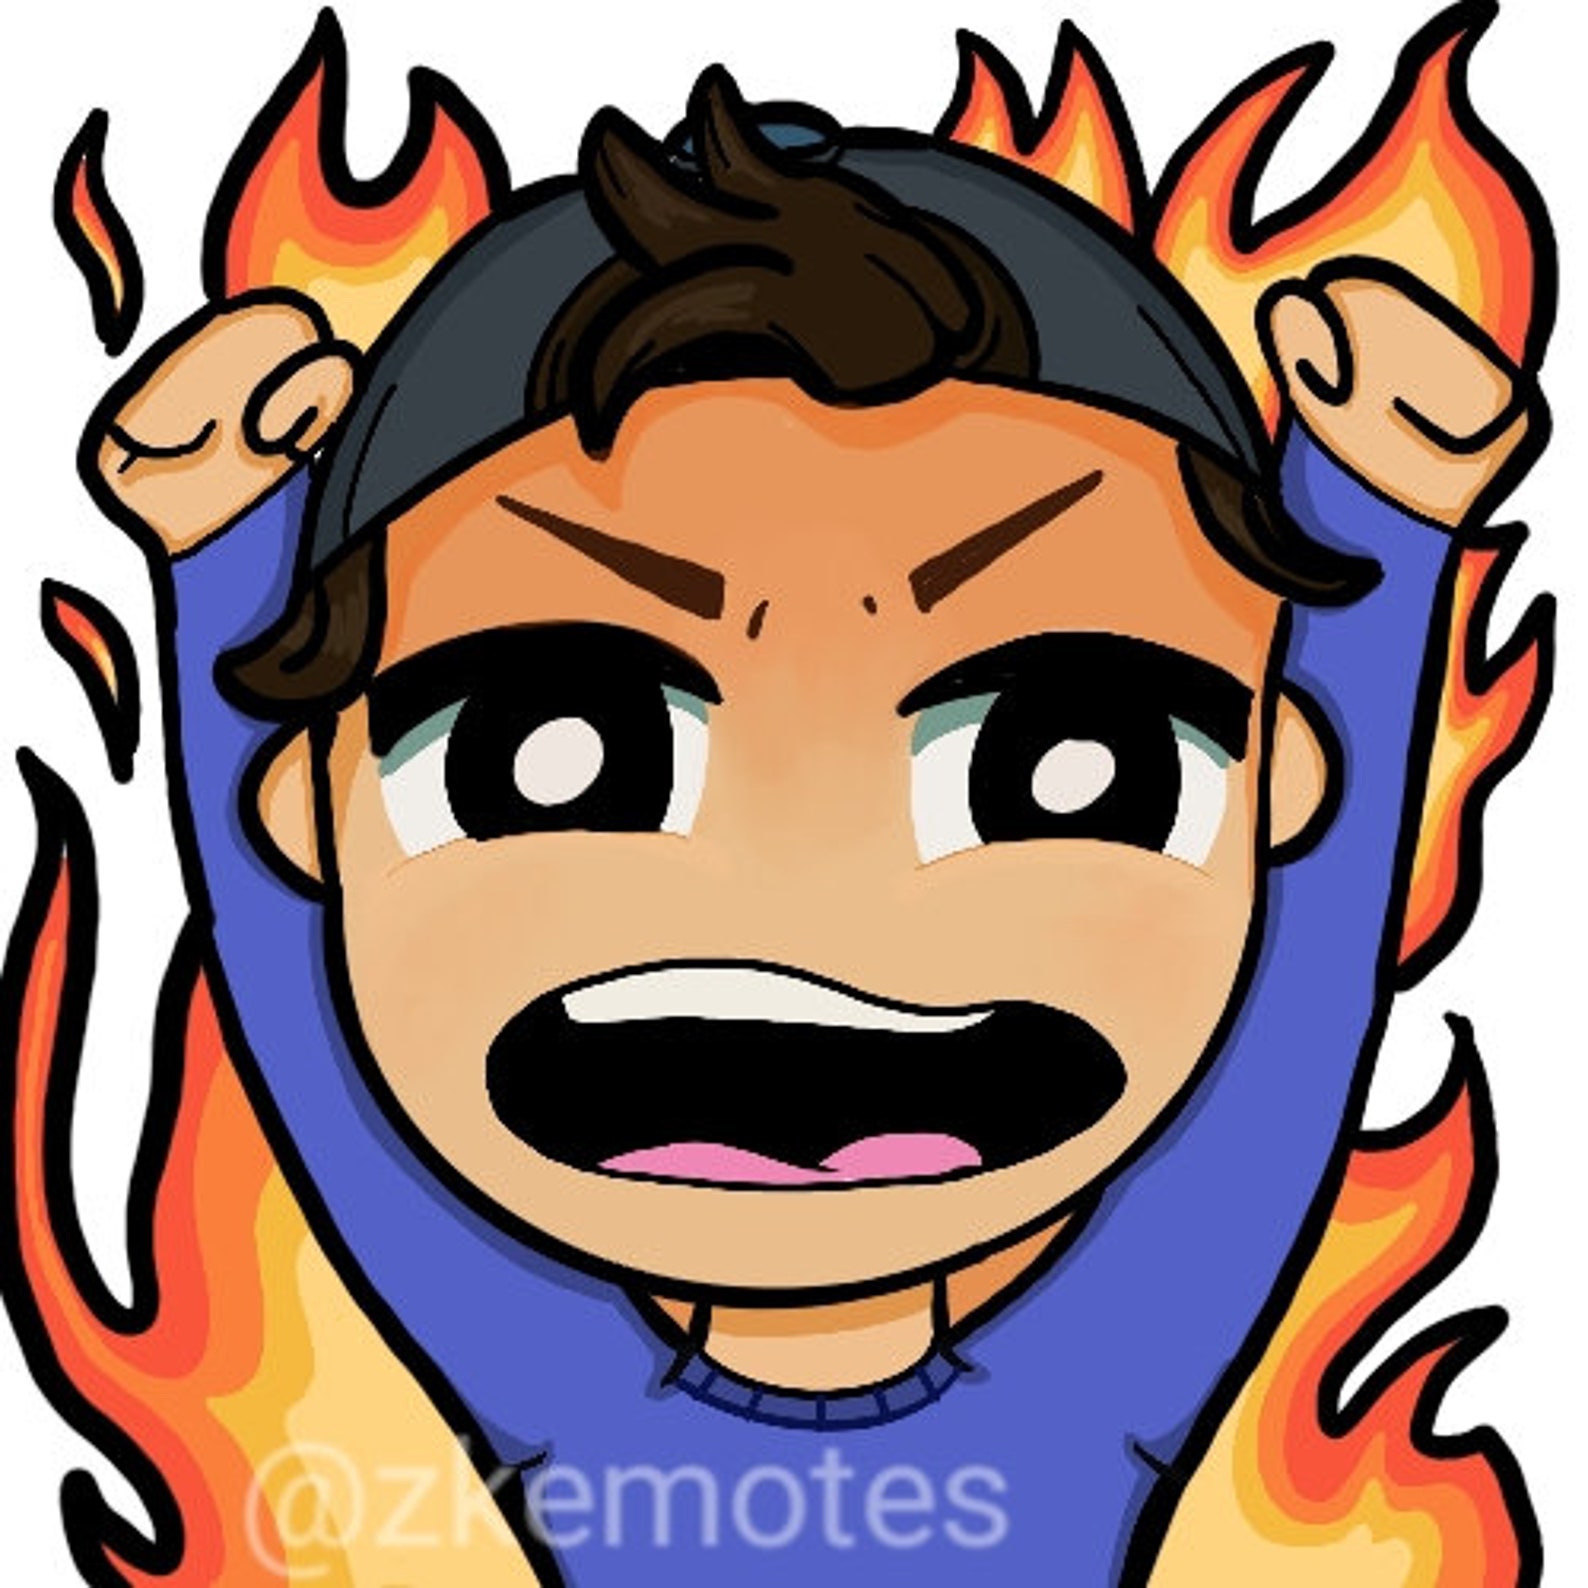 RAGE Emote Angry Emote Fire Emote Burning Emote Twitch | Etsy